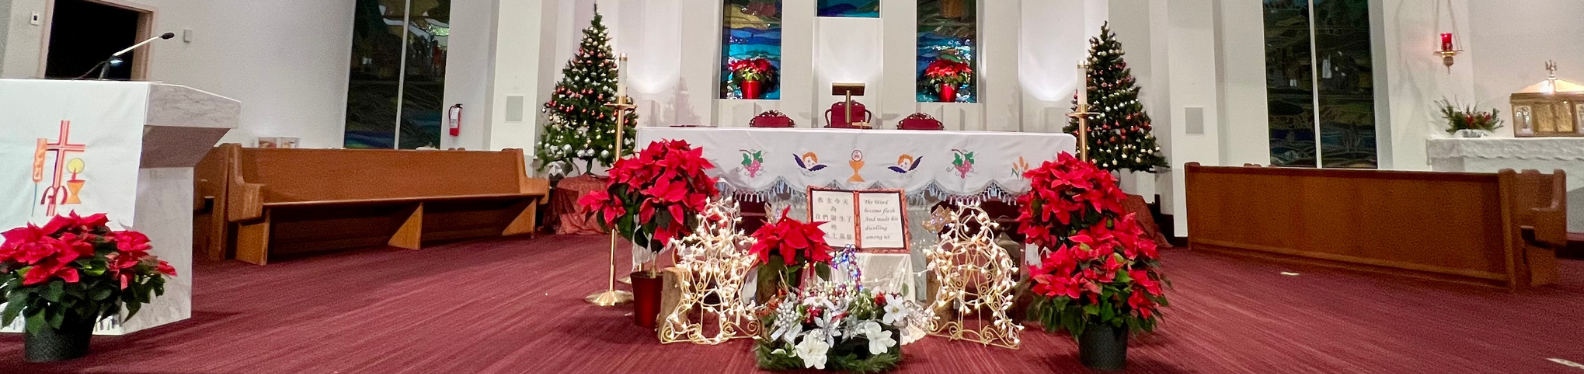 CMCC Altar-Christmas-banner.png